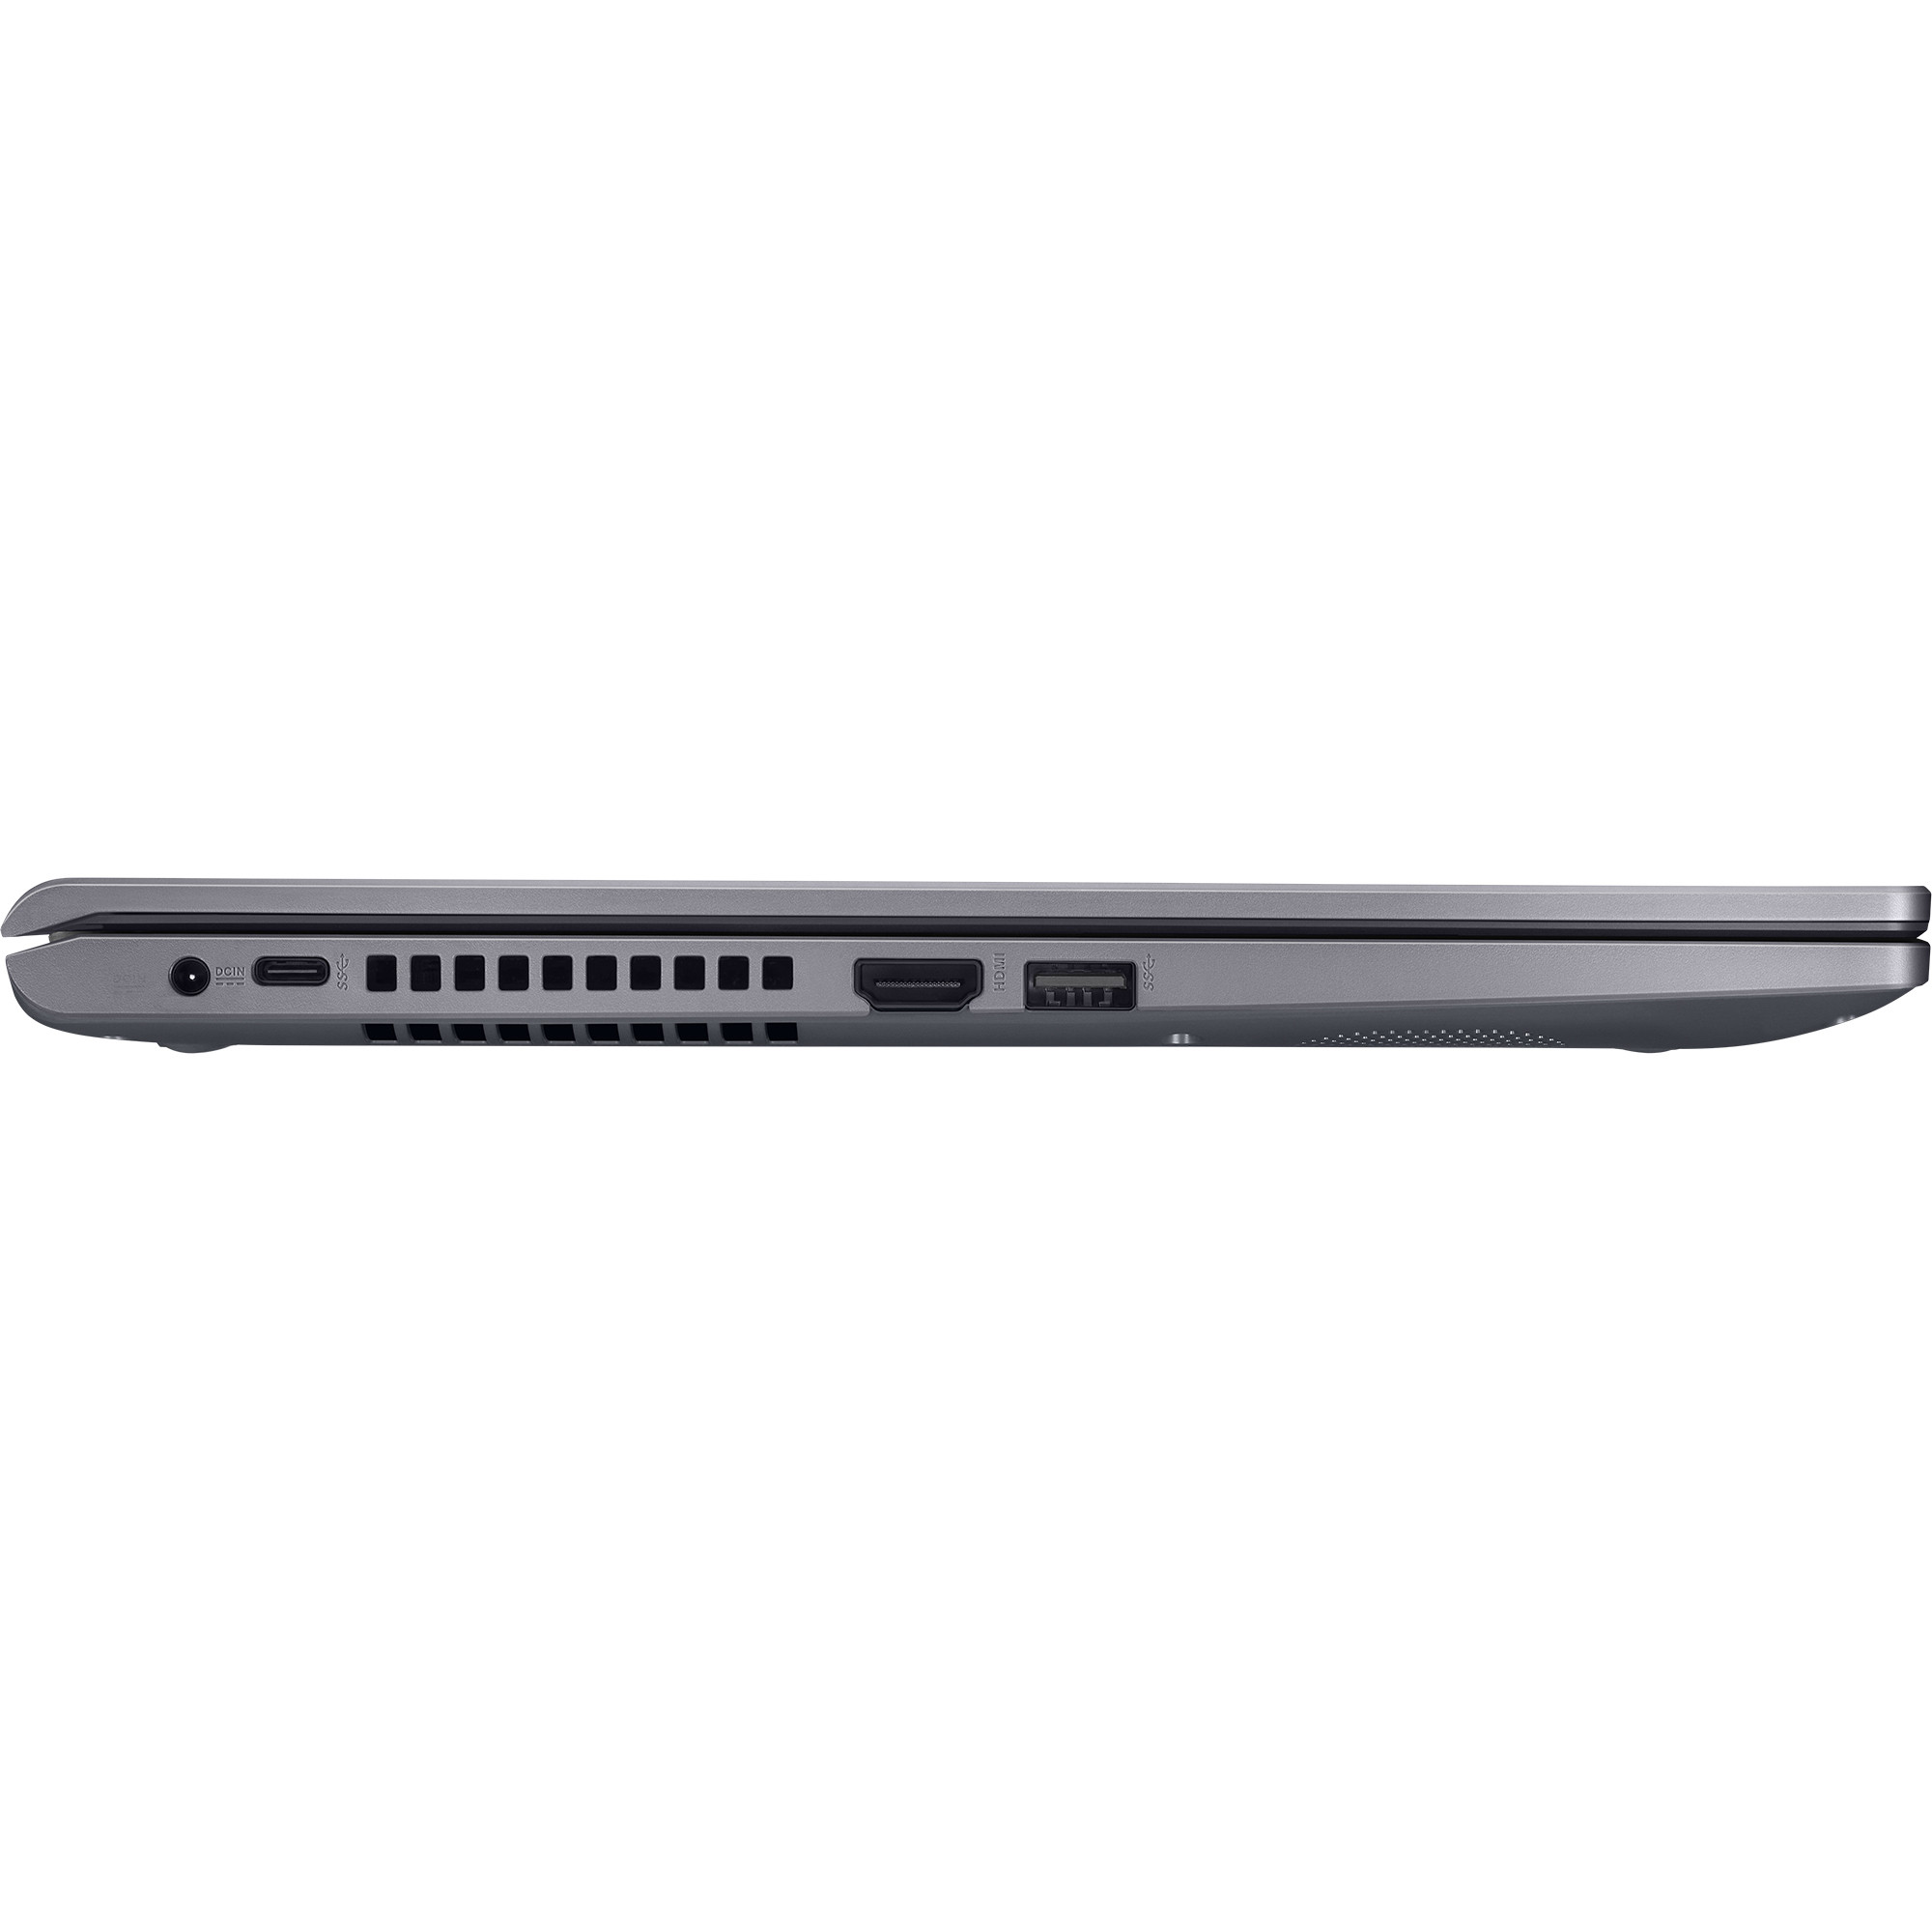 Asus VivoBook F515JA-BR097T i3-1005G1 8GB 256SSD 15.6 W10 (Polvo pantalla) Reacondicionat